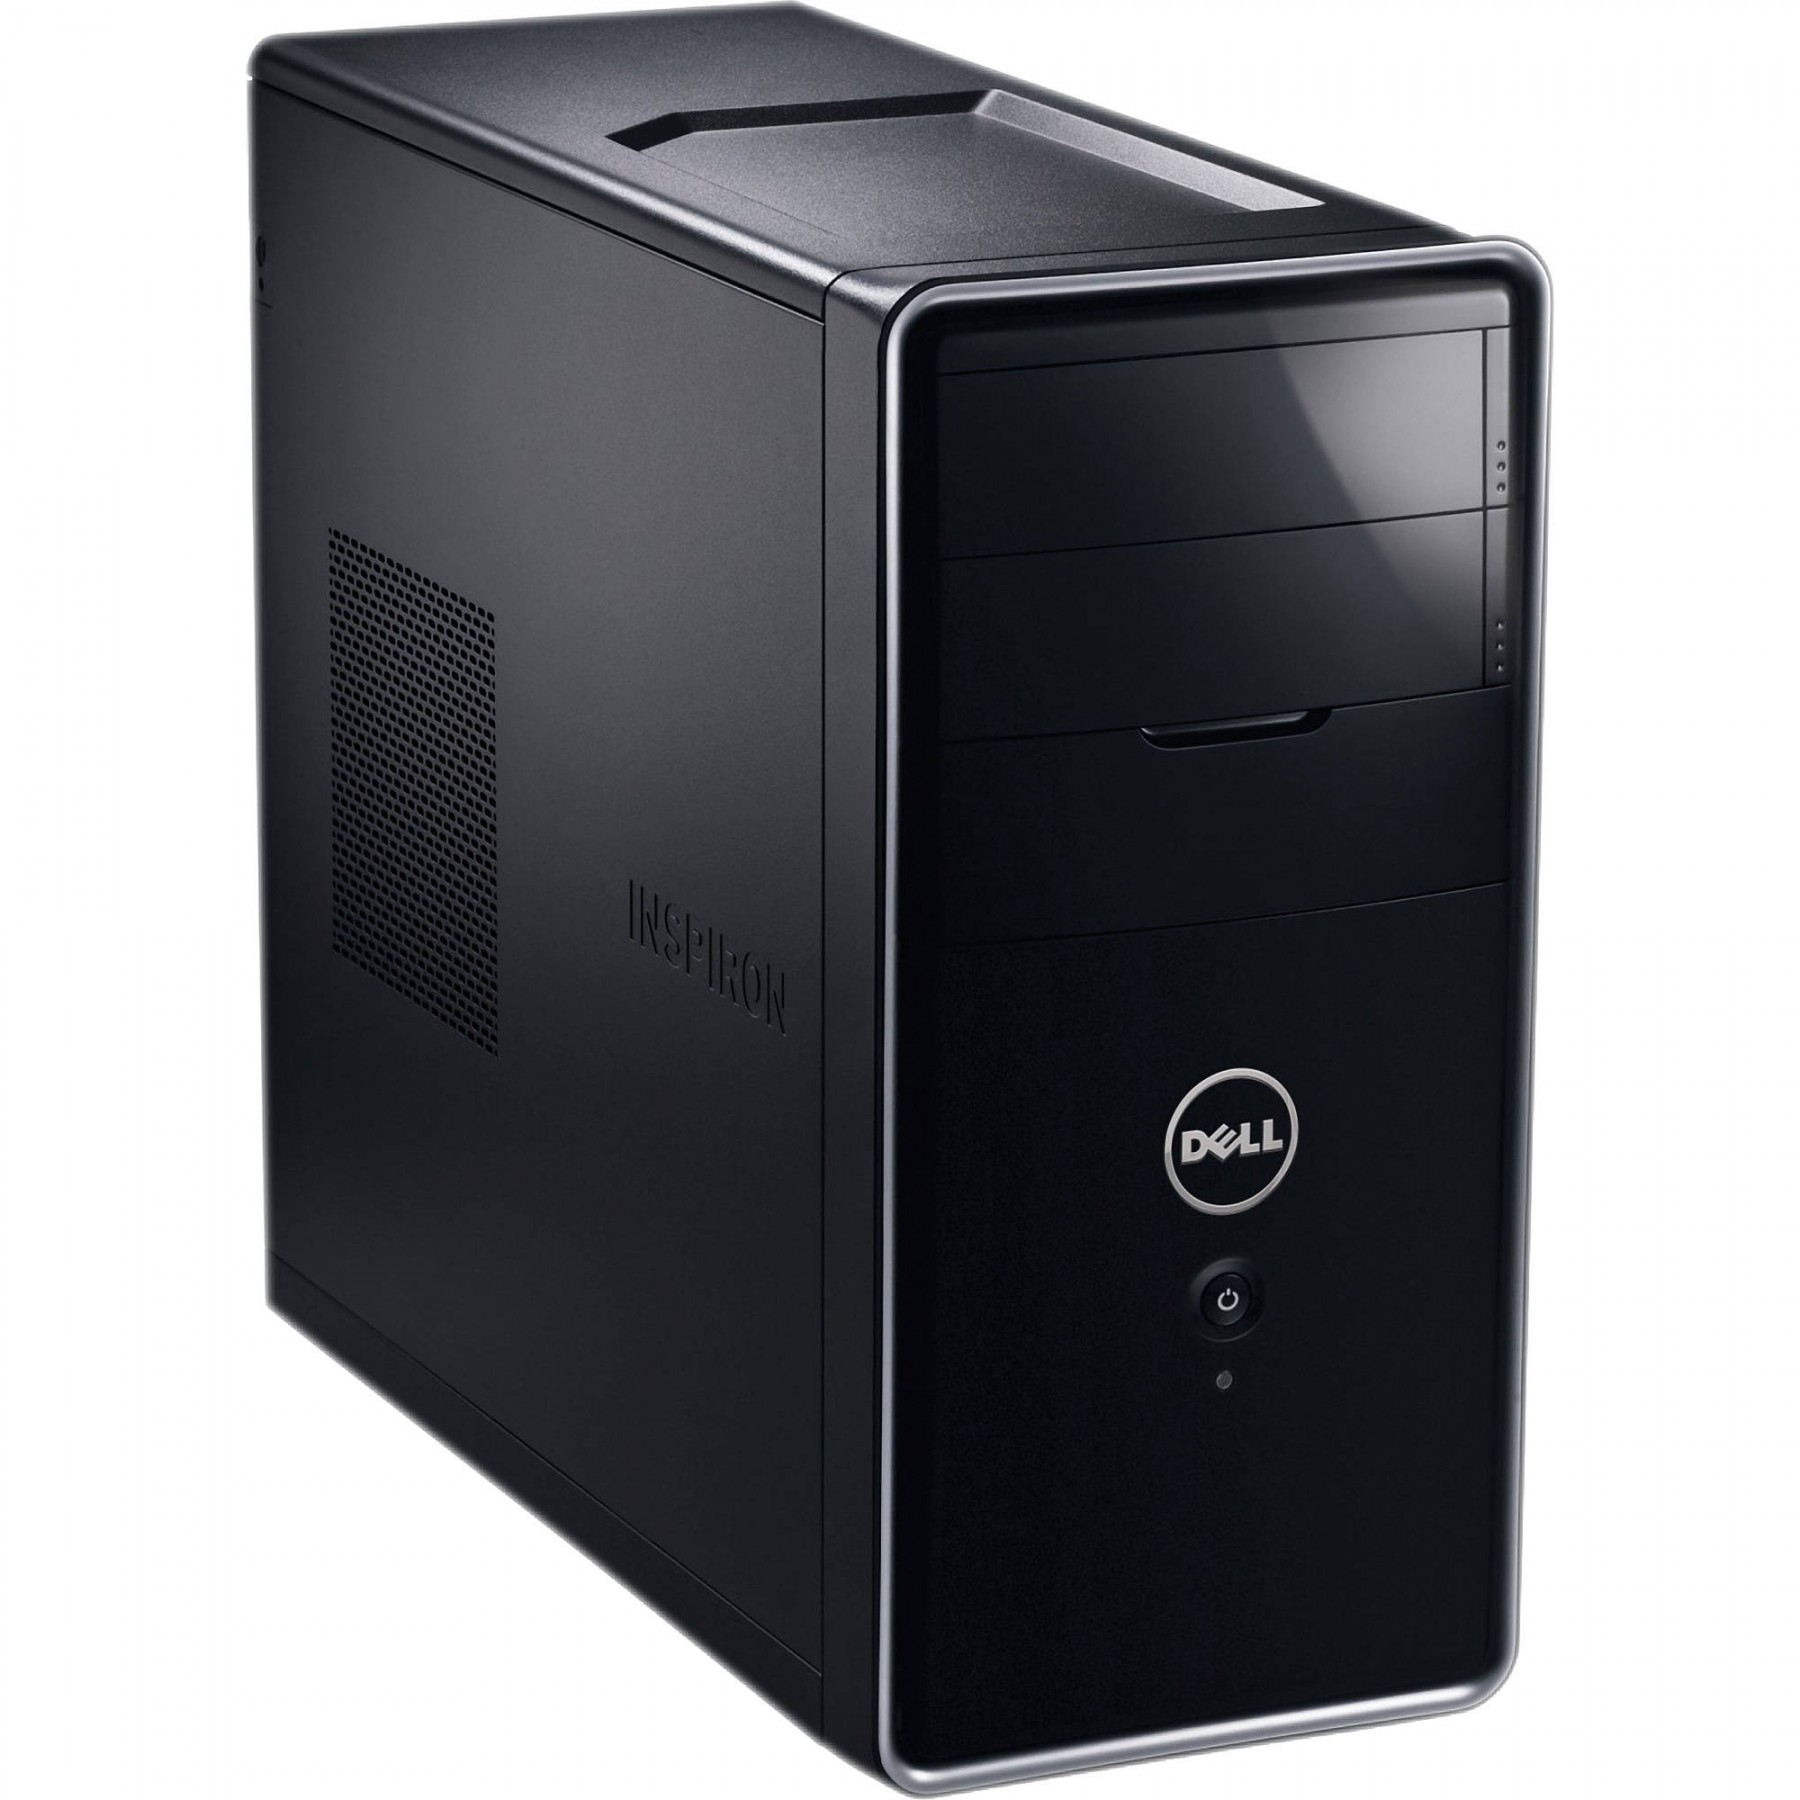 DELL-INS-620-MT-i3-Dell Inspiron 620 Refurbished MT Windows 10 Professional 250 GB HDD 4 GB RAM Core i3 Mini Tower Computer #-image